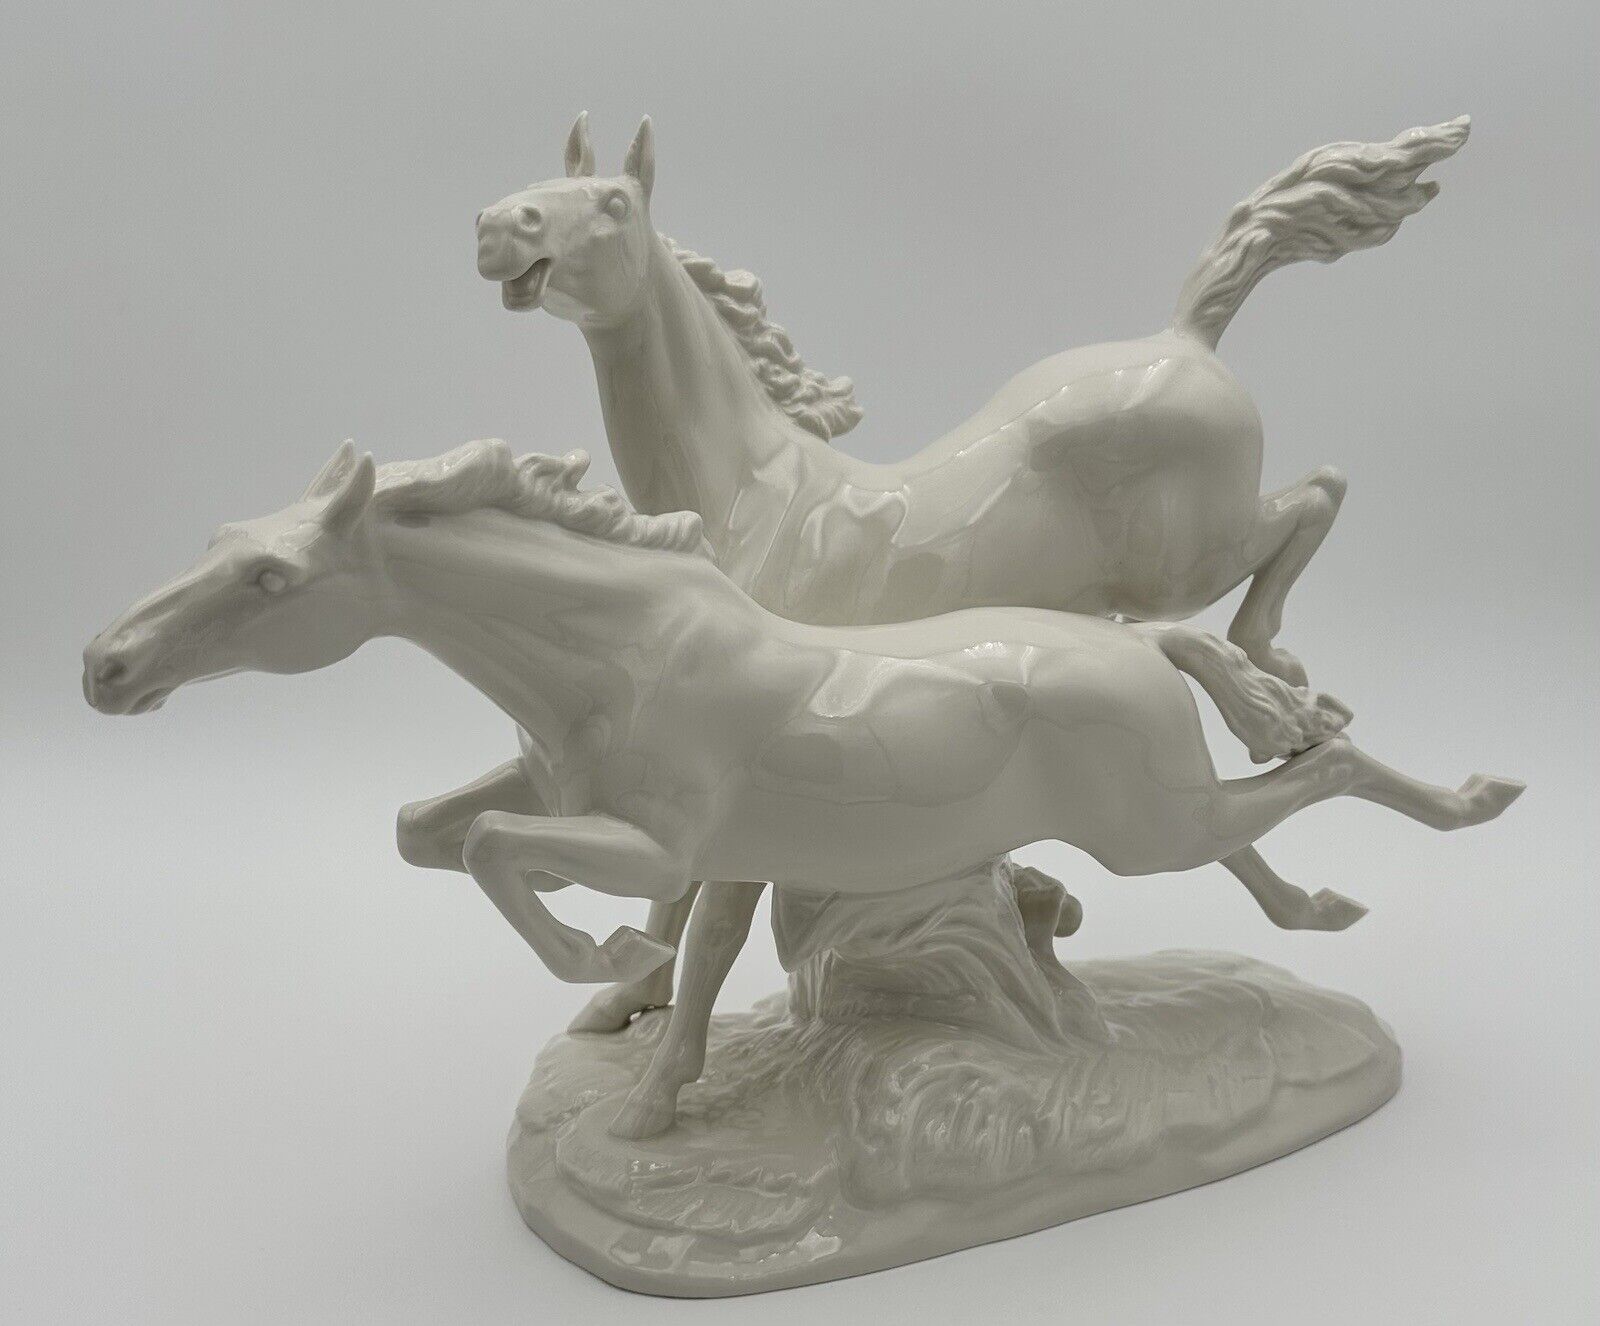 Vintage Hutschenreuther White MH Fritz Design Wild Porcelain Horses Figurine